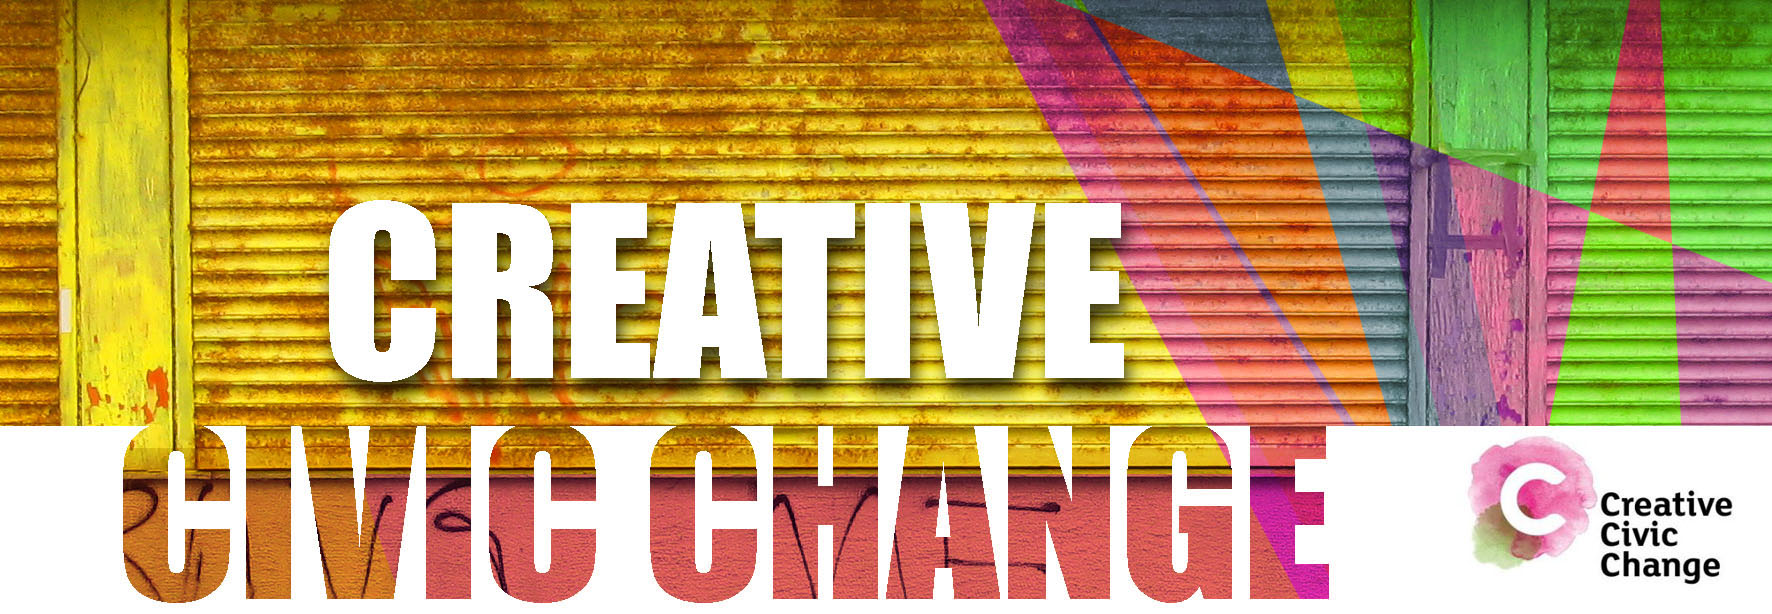 Creative Civic Change banner